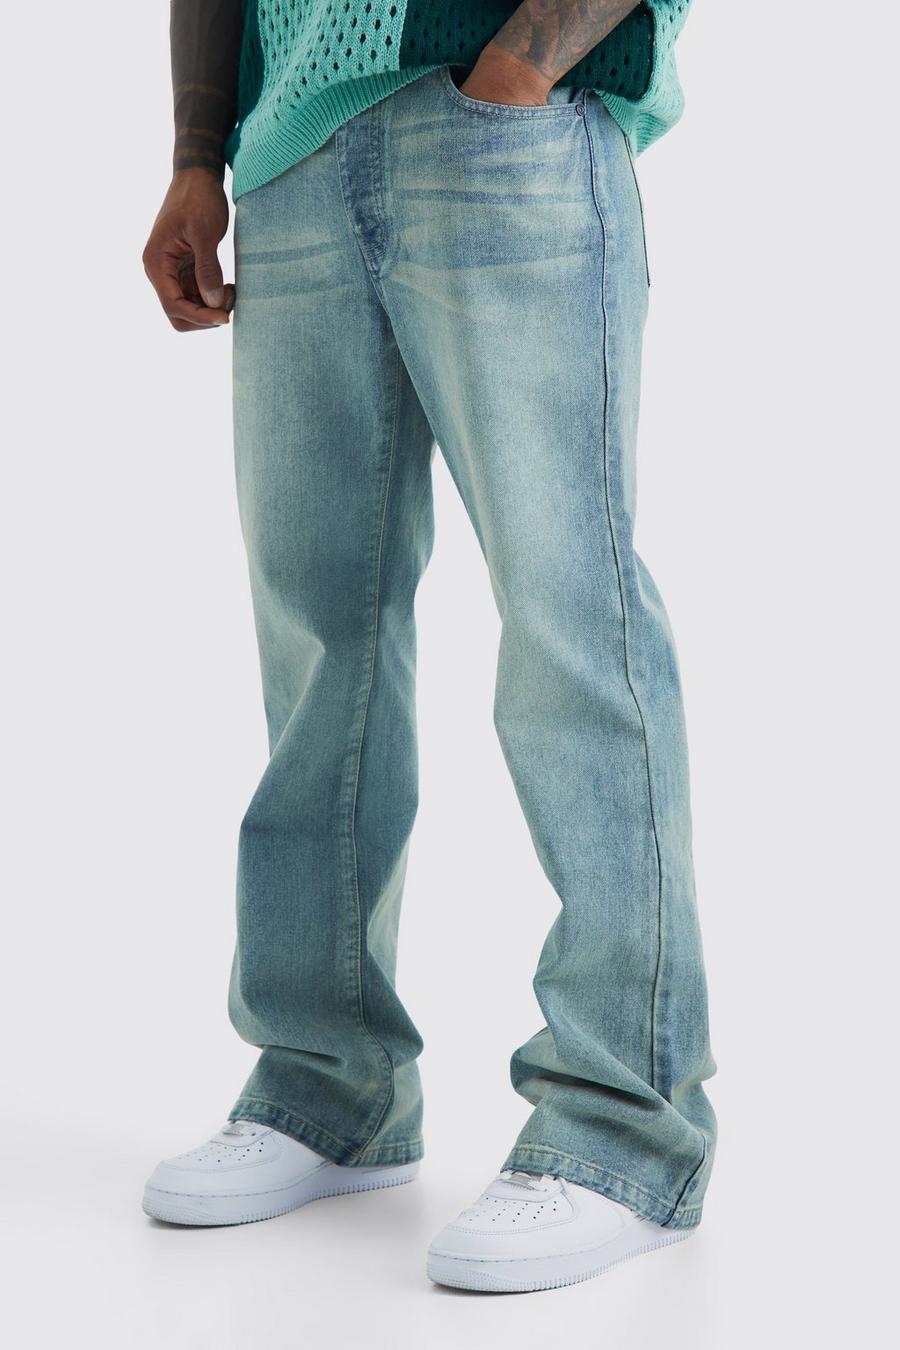 Men's Bootcut Jeans, Men's Flared Jeans